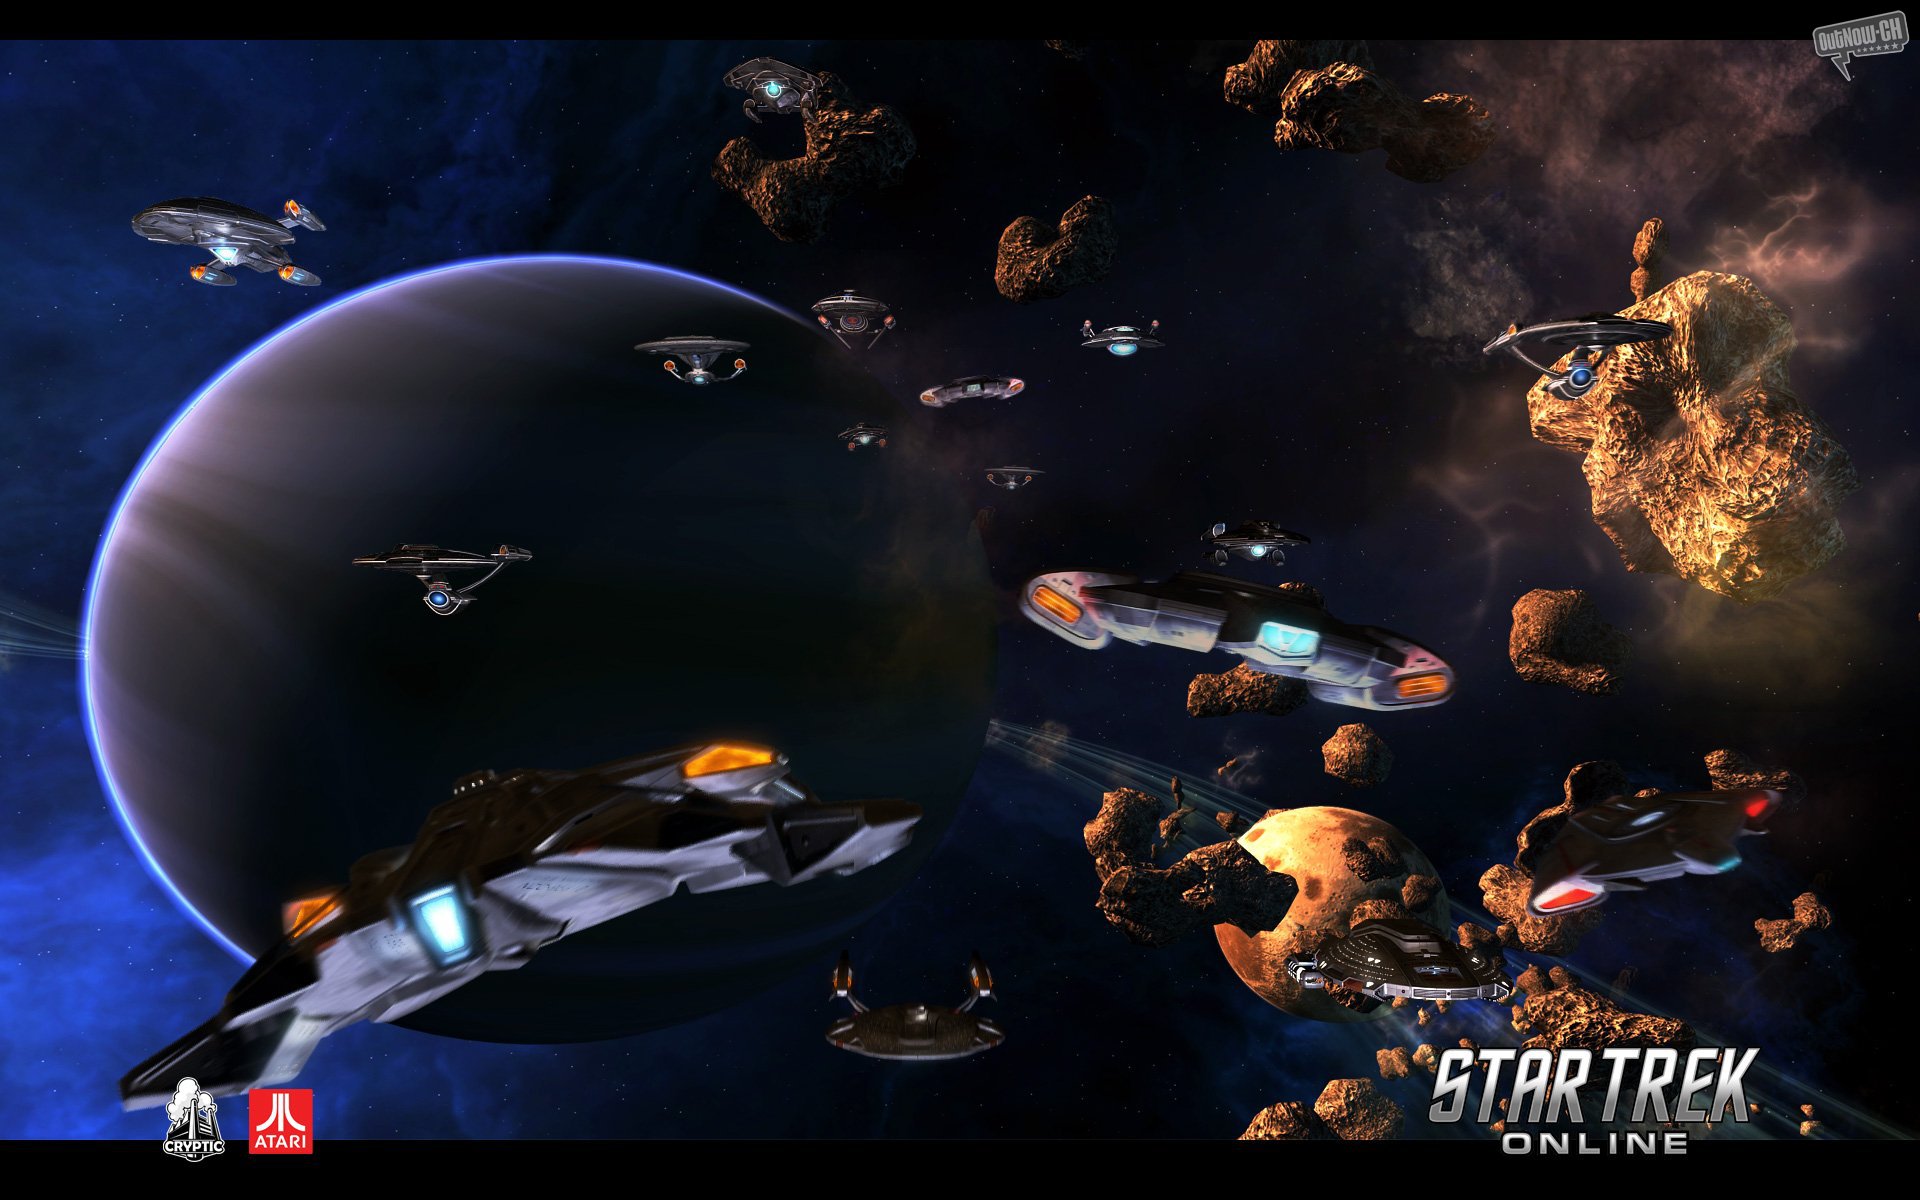 Star Trek: Online wallpapers | Star Trek: Online stock photos